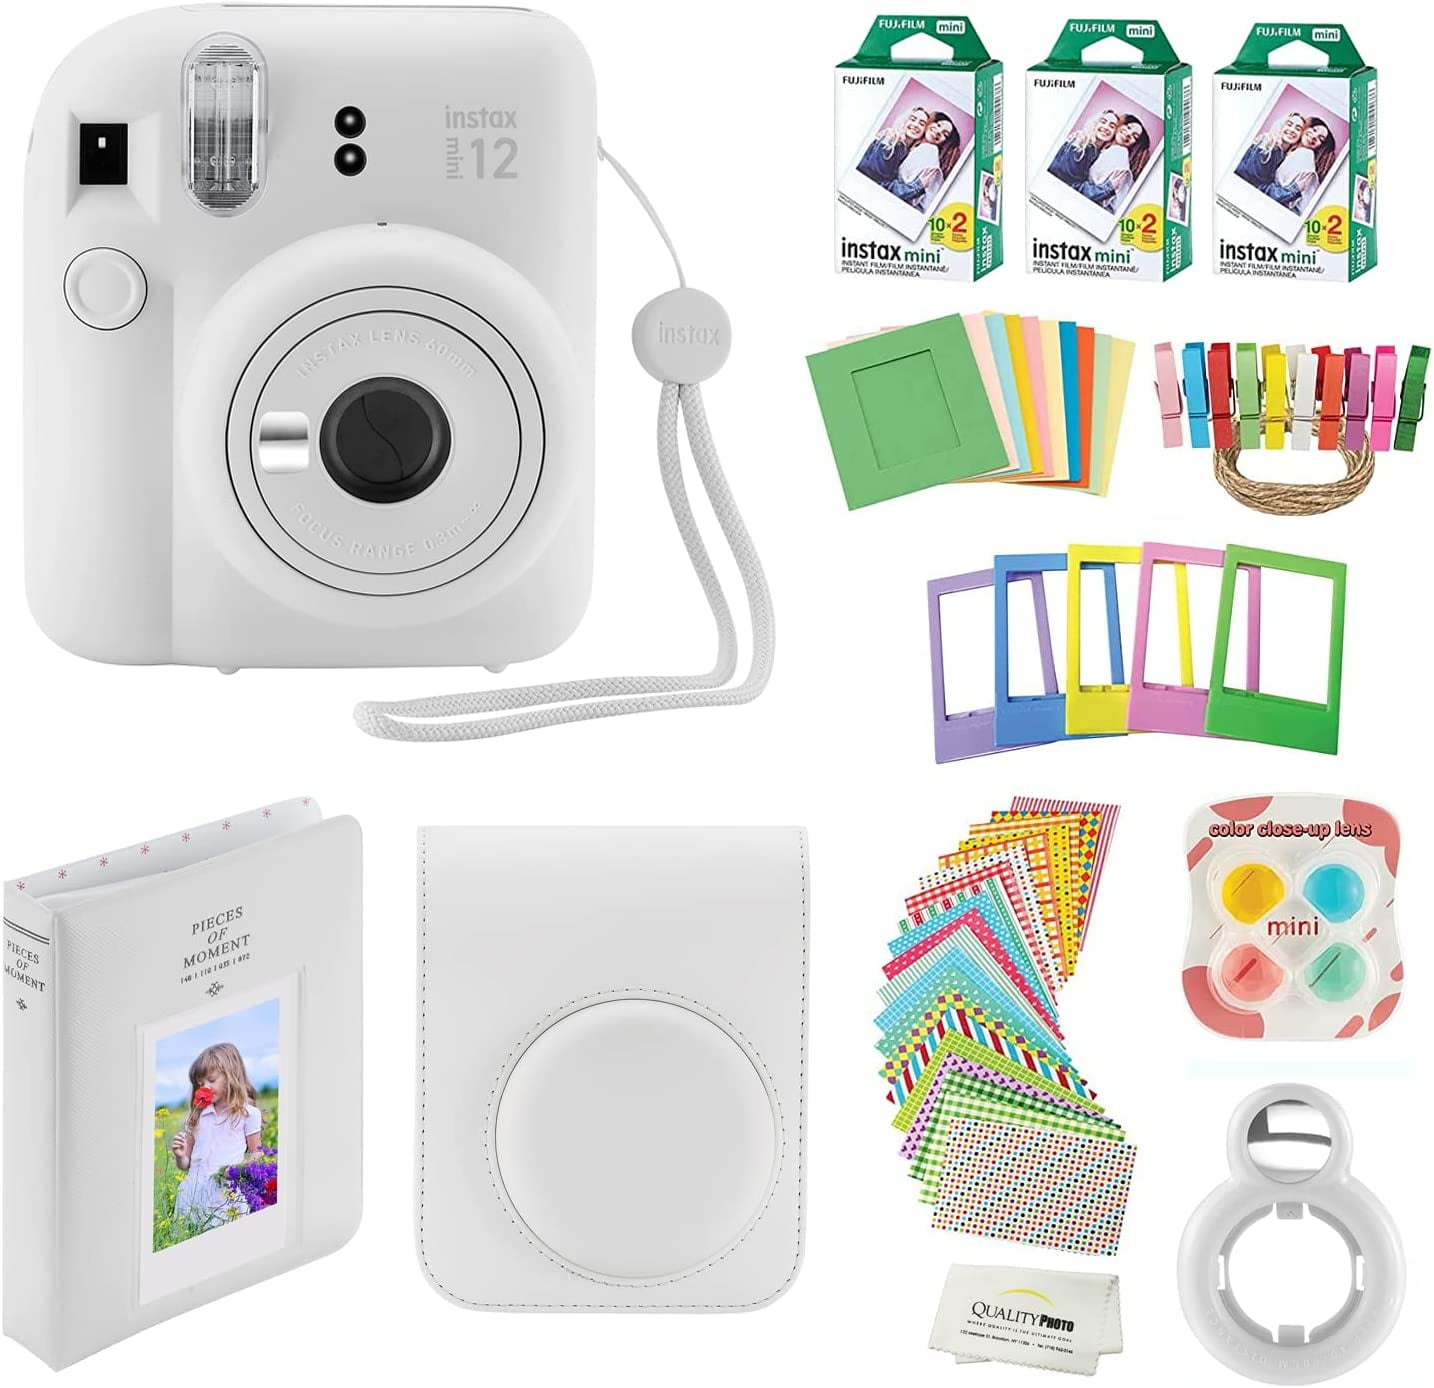 Fujifilm Instax Mini 12 Instant Camera with Case, 60 Fuji Films, Decoration Stickers, Frames, Photo Album and More Accessory (Clay White) Walmart.com